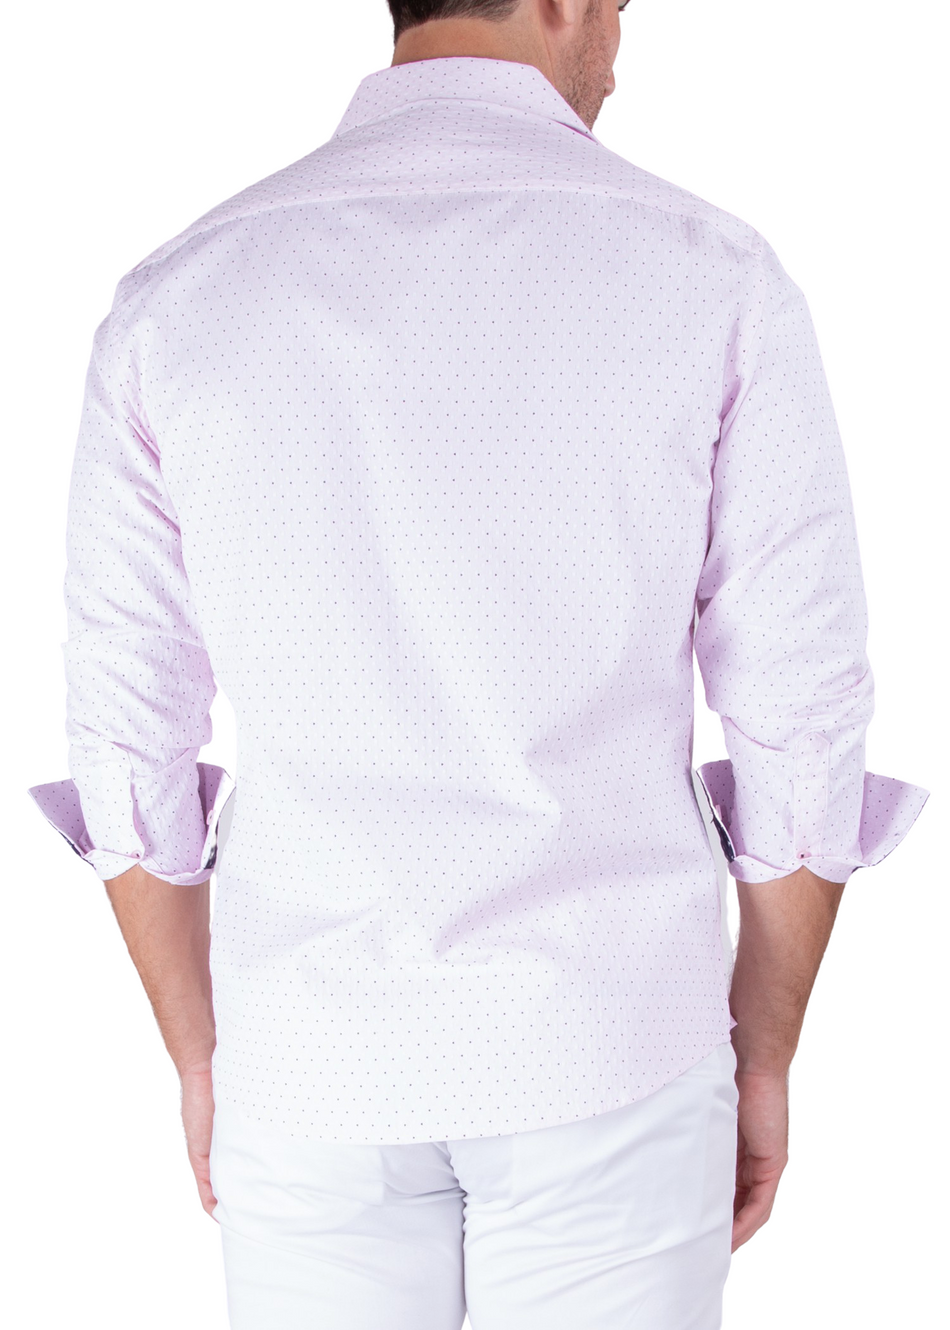 Polka Dot Stitched Texture Button Up Long Sleeve Dress Shirt Pink